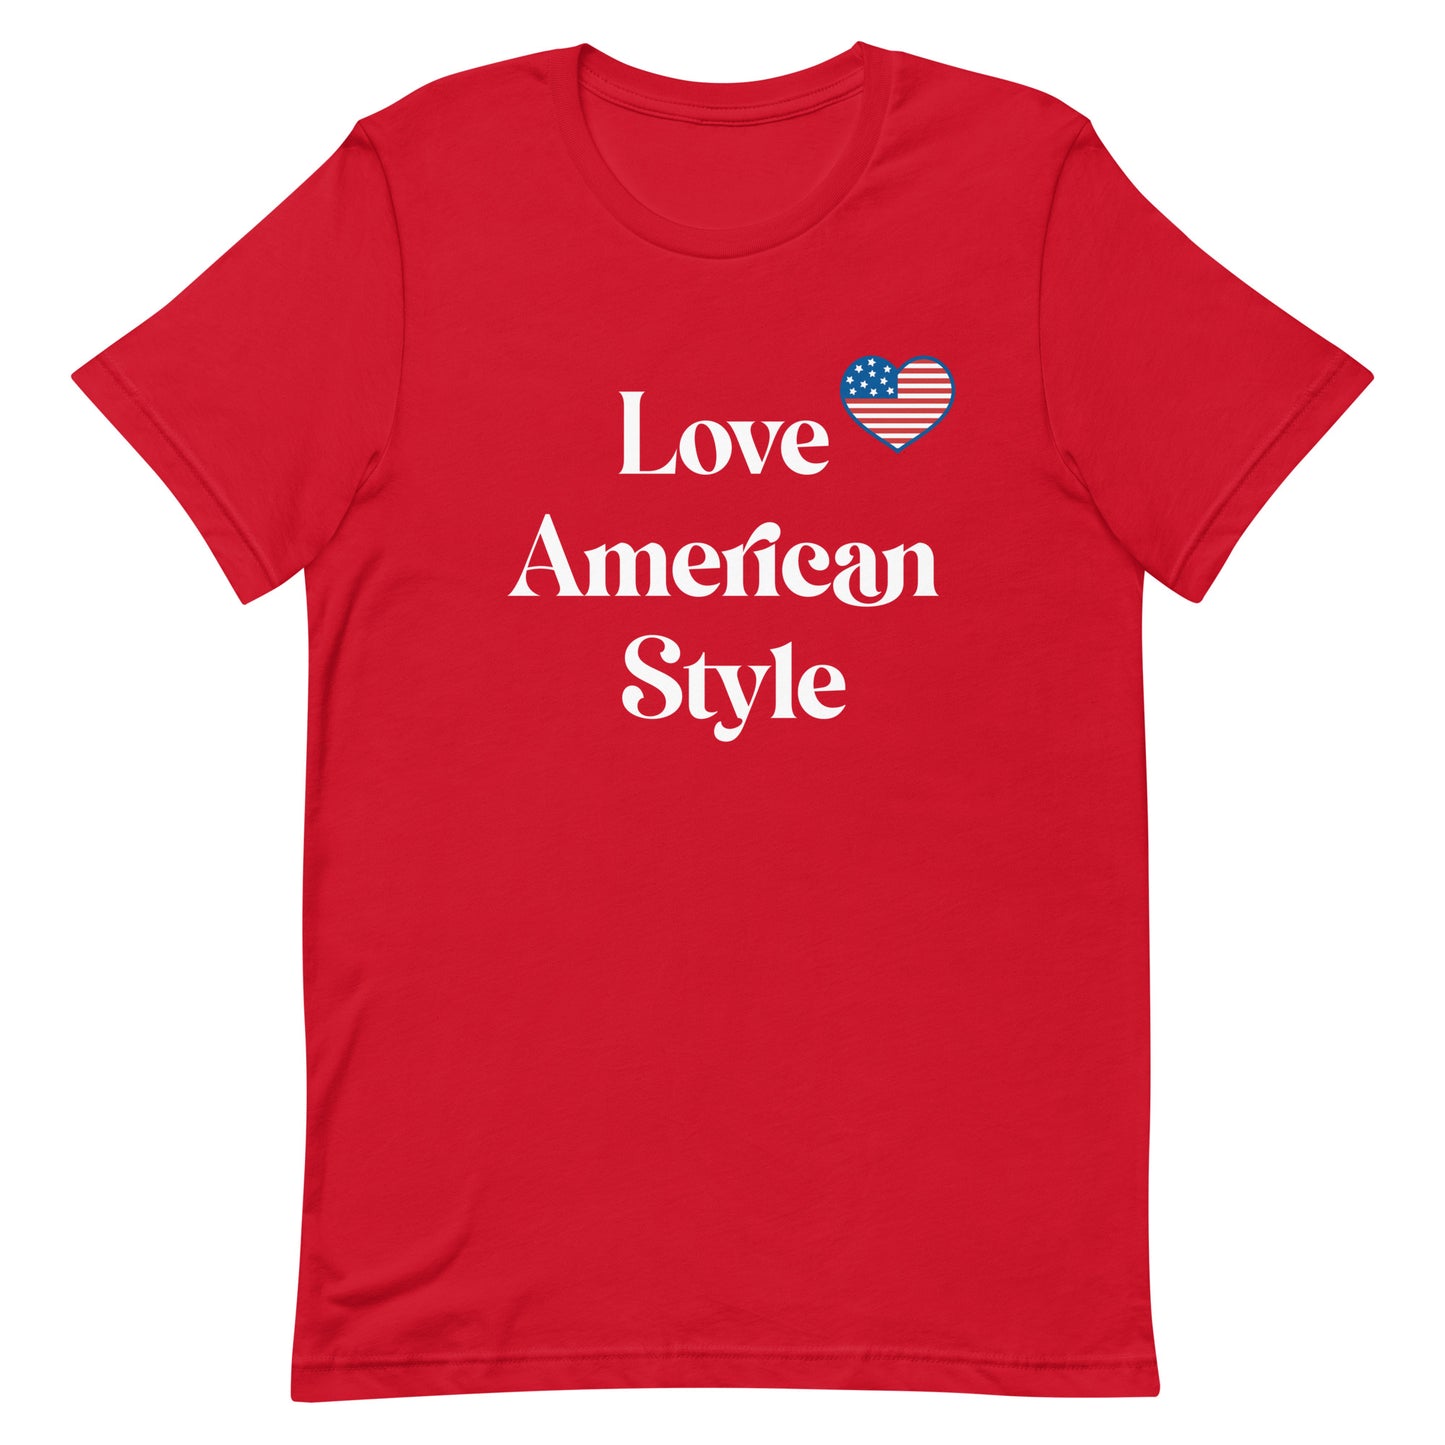 Love American Style!  Unisex t-shirt